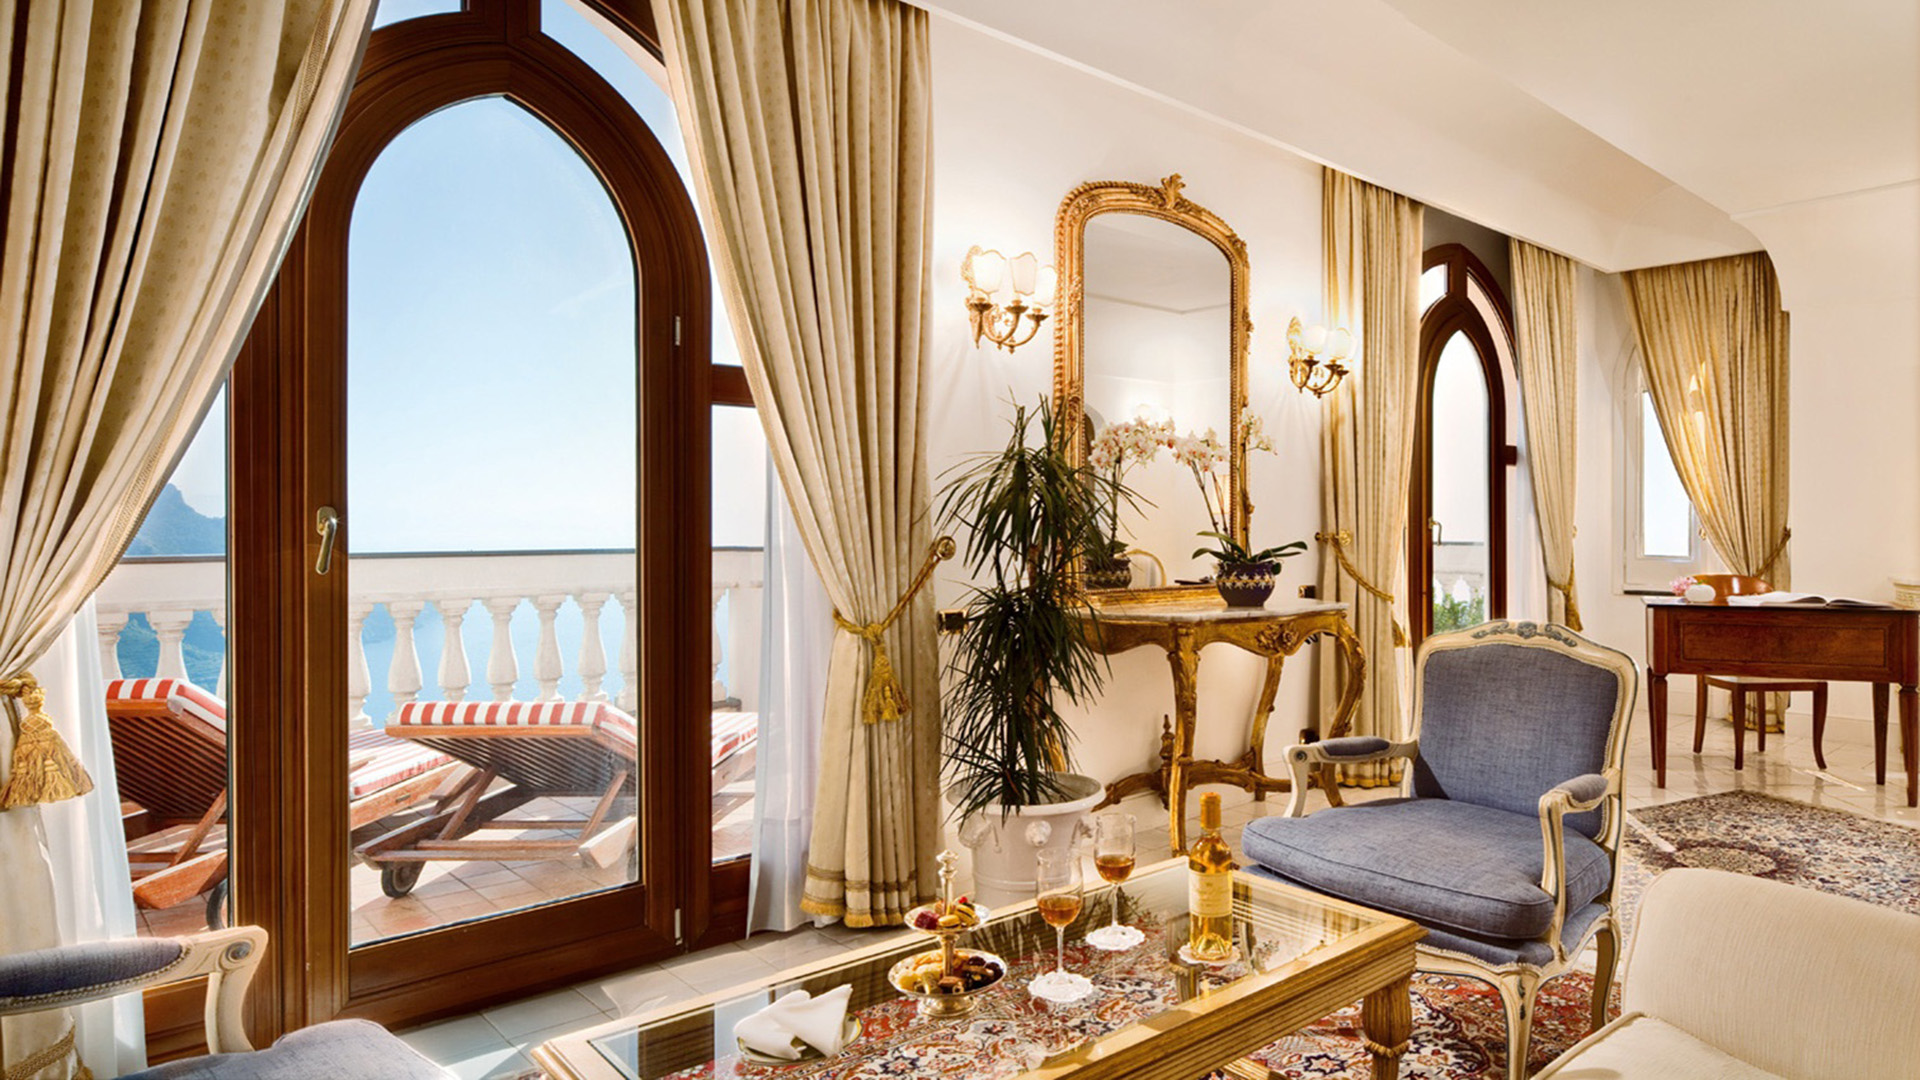 Double bedroom with sea view from Palazzo Avino, Italy